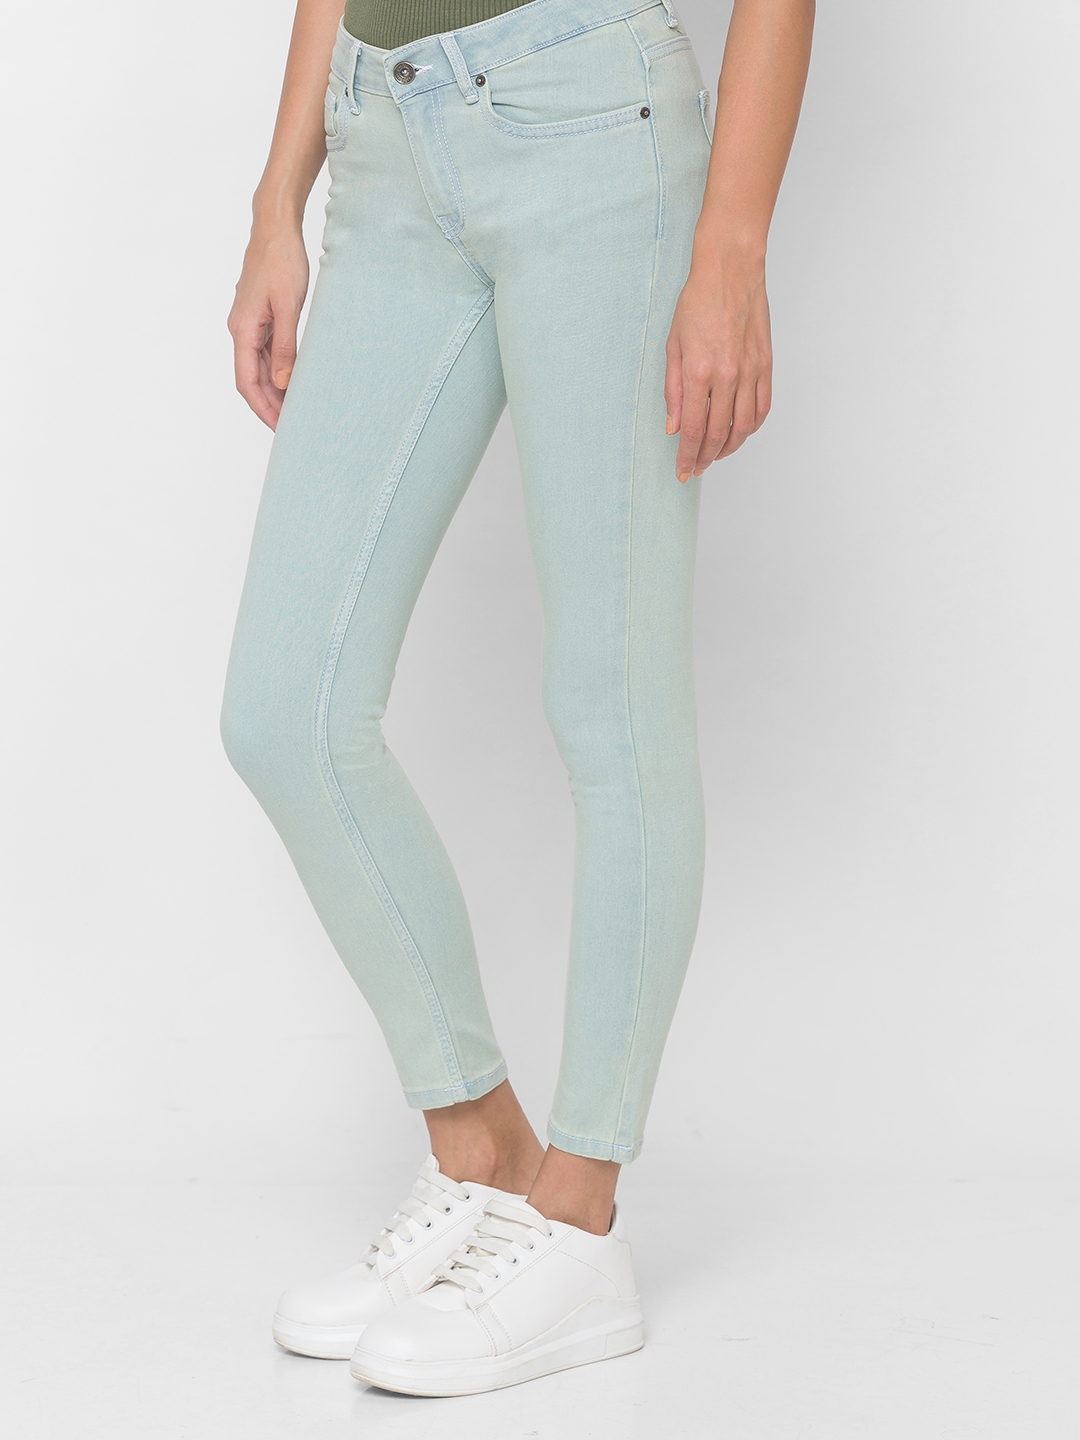 globus | Women's Blue Cotton Solid Skinny Jeans 3